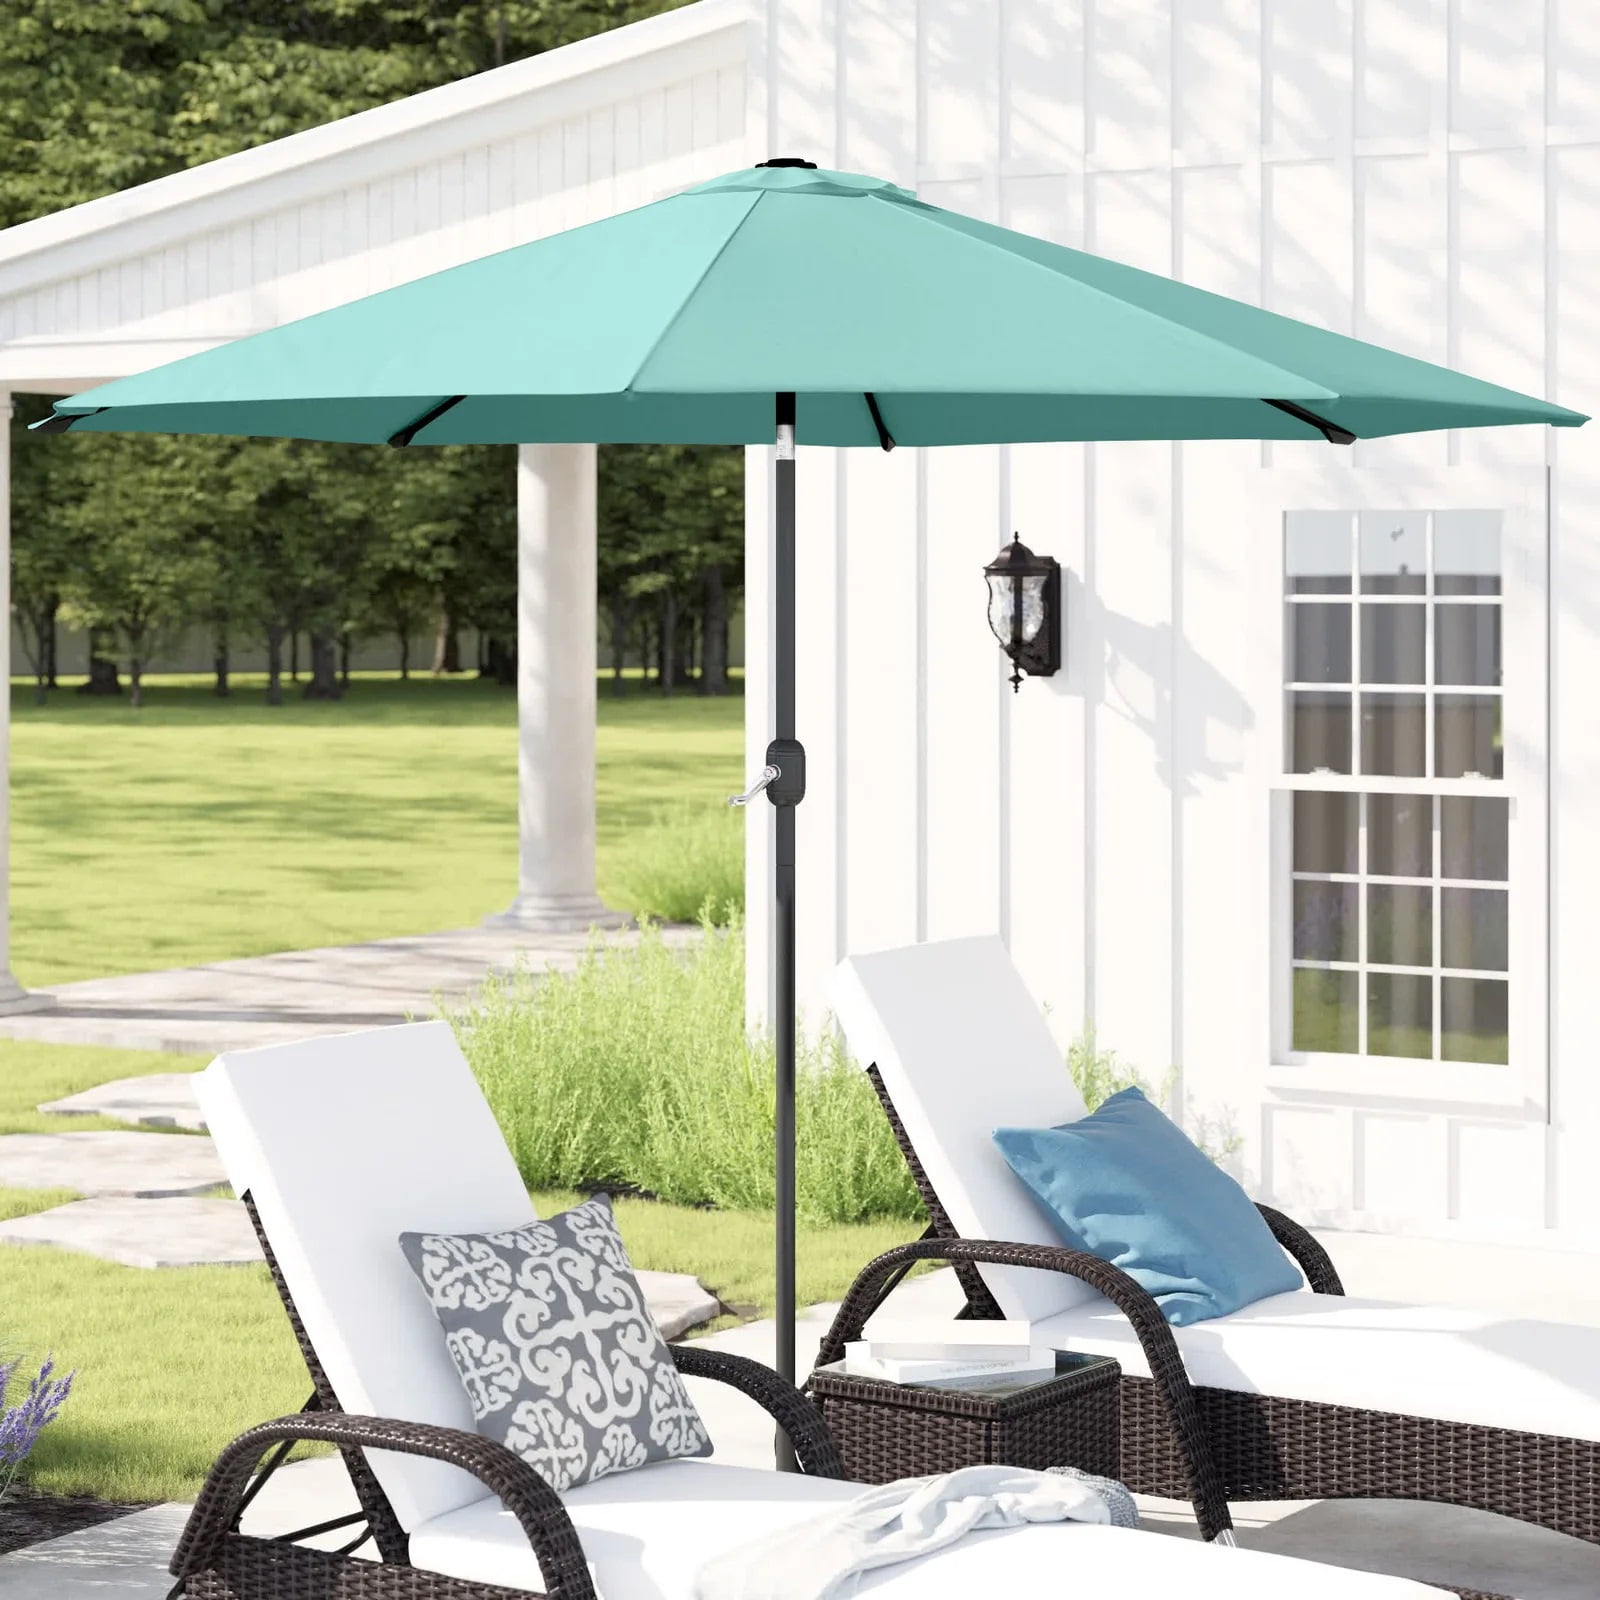 VonHaus Wooden Garden Parasol 2m Hunter Green UV30+ Rated outdoor space Classic Outdoor Umbrella for patio garden